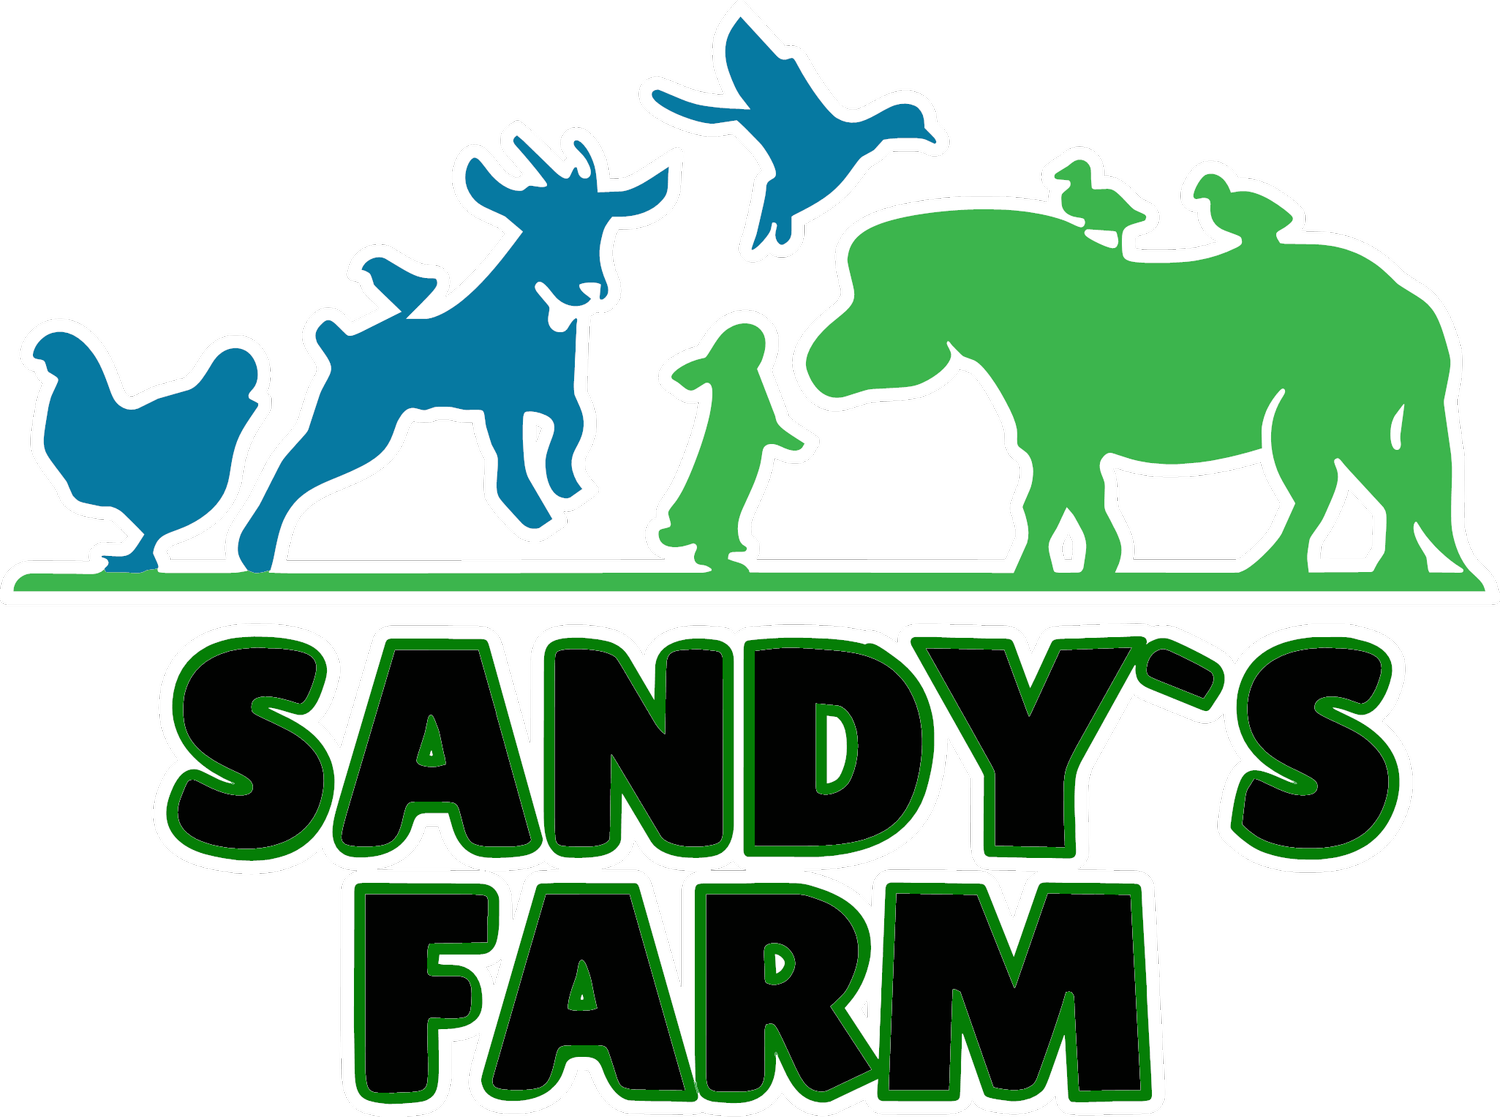 Sandys farm 